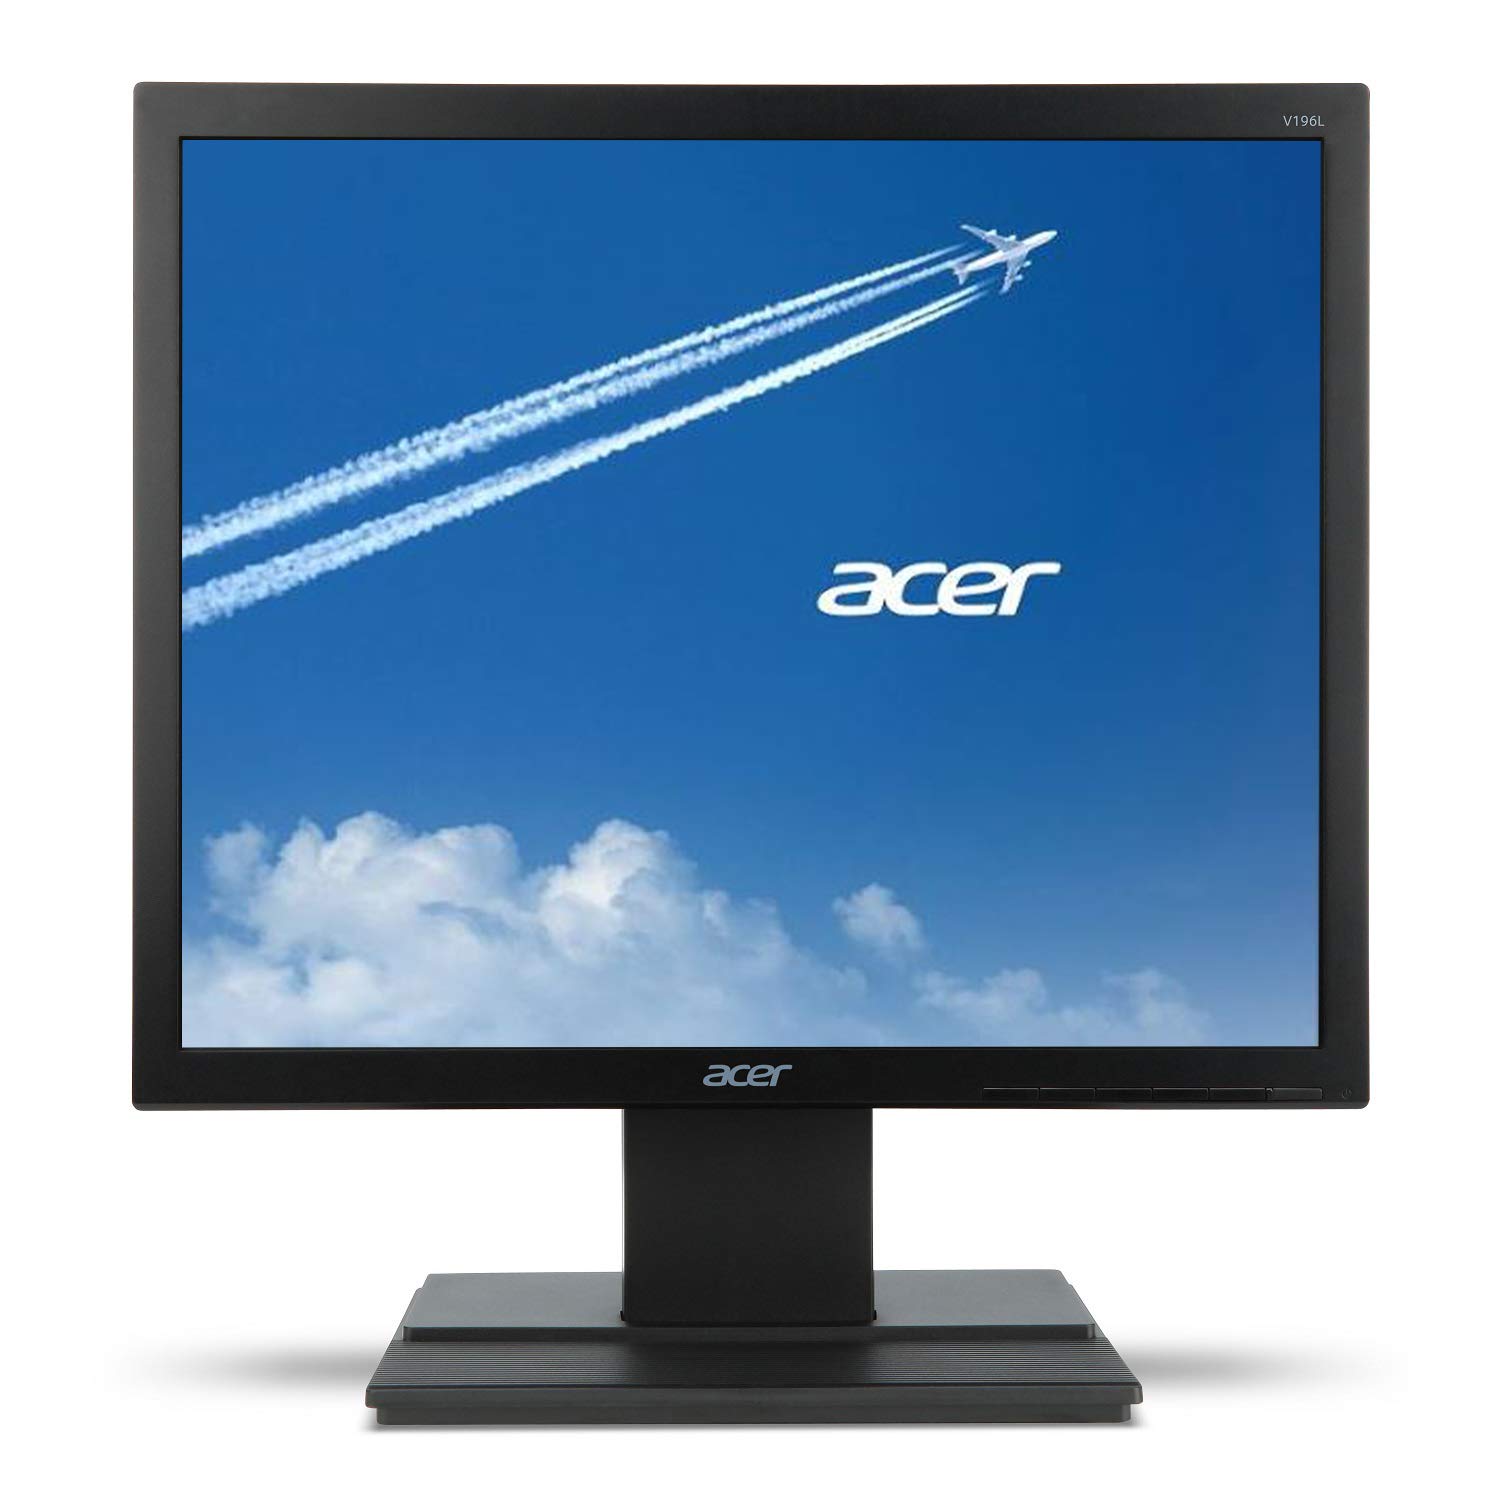 Acer V196L Bb 19' HD(1280 x 1024) IPS 모니터(VGA 포트)